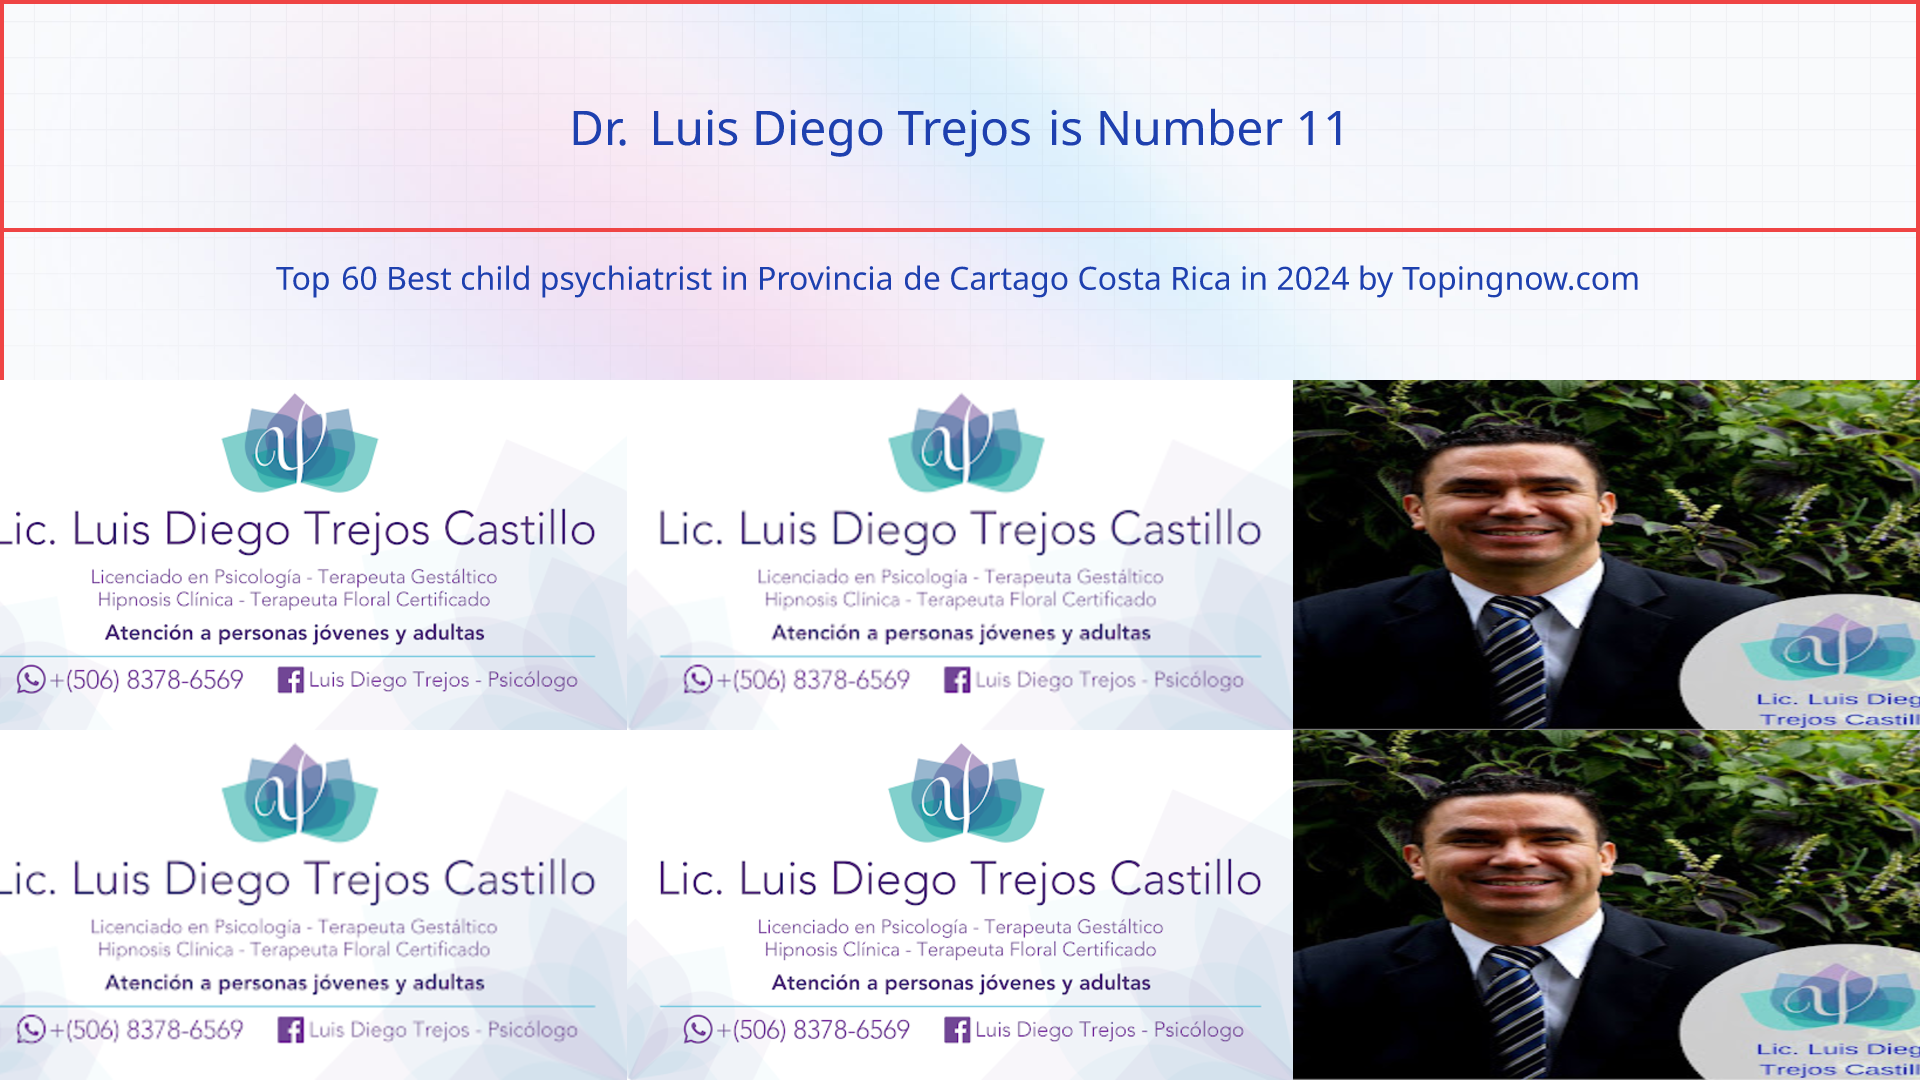 Dr. Luis Diego Trejos: Top 60 Best child psychiatrist in Provincia de Cartago Costa Rica in 2024